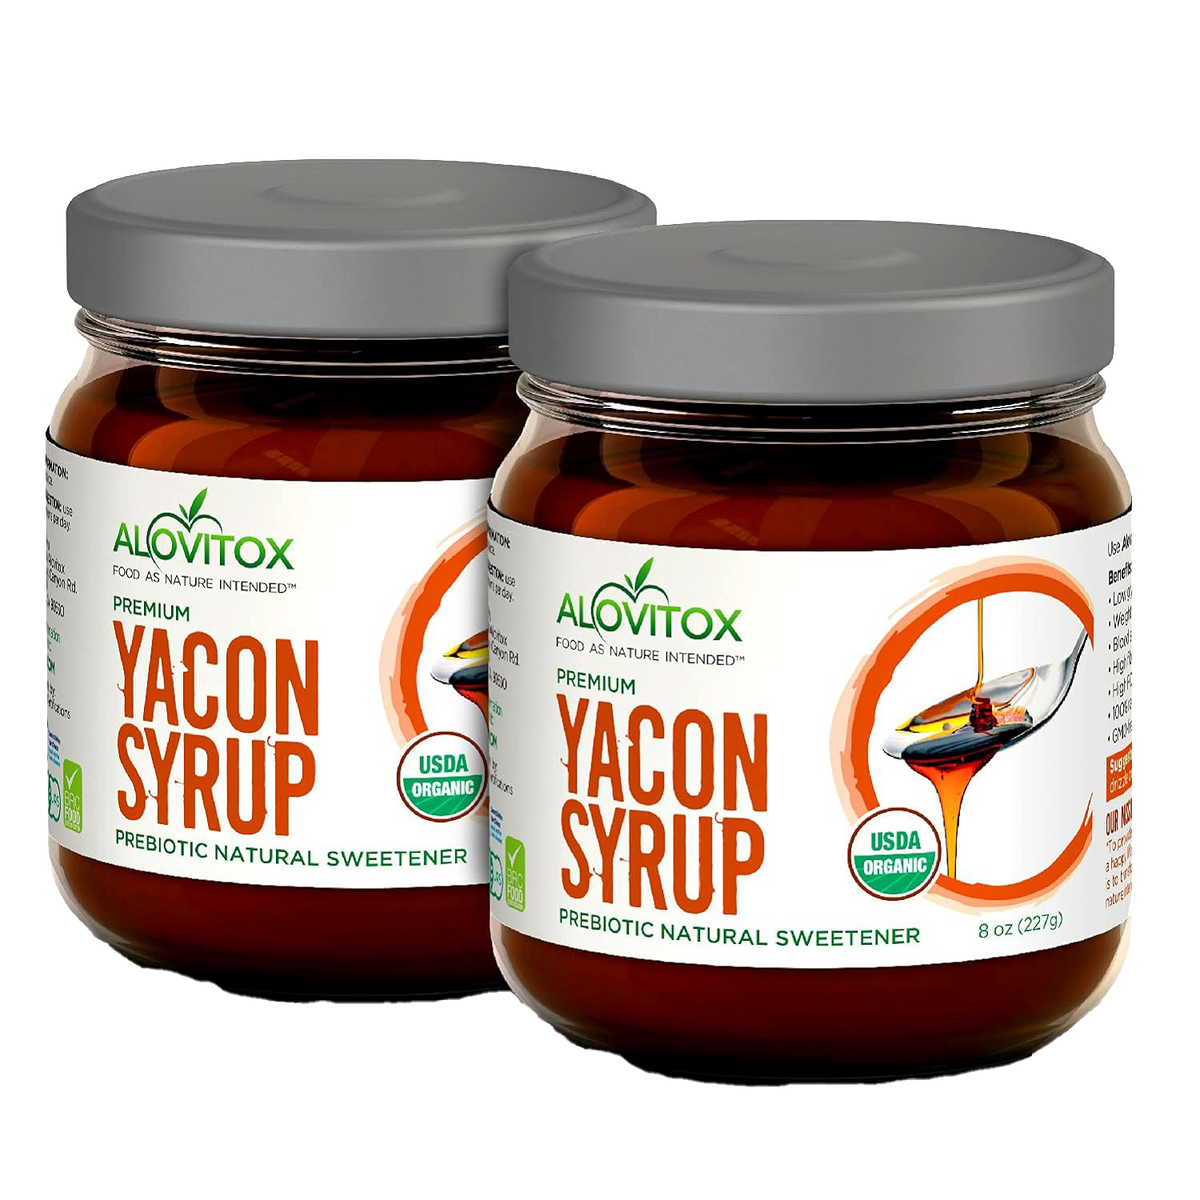 Organic Yacon Syrup